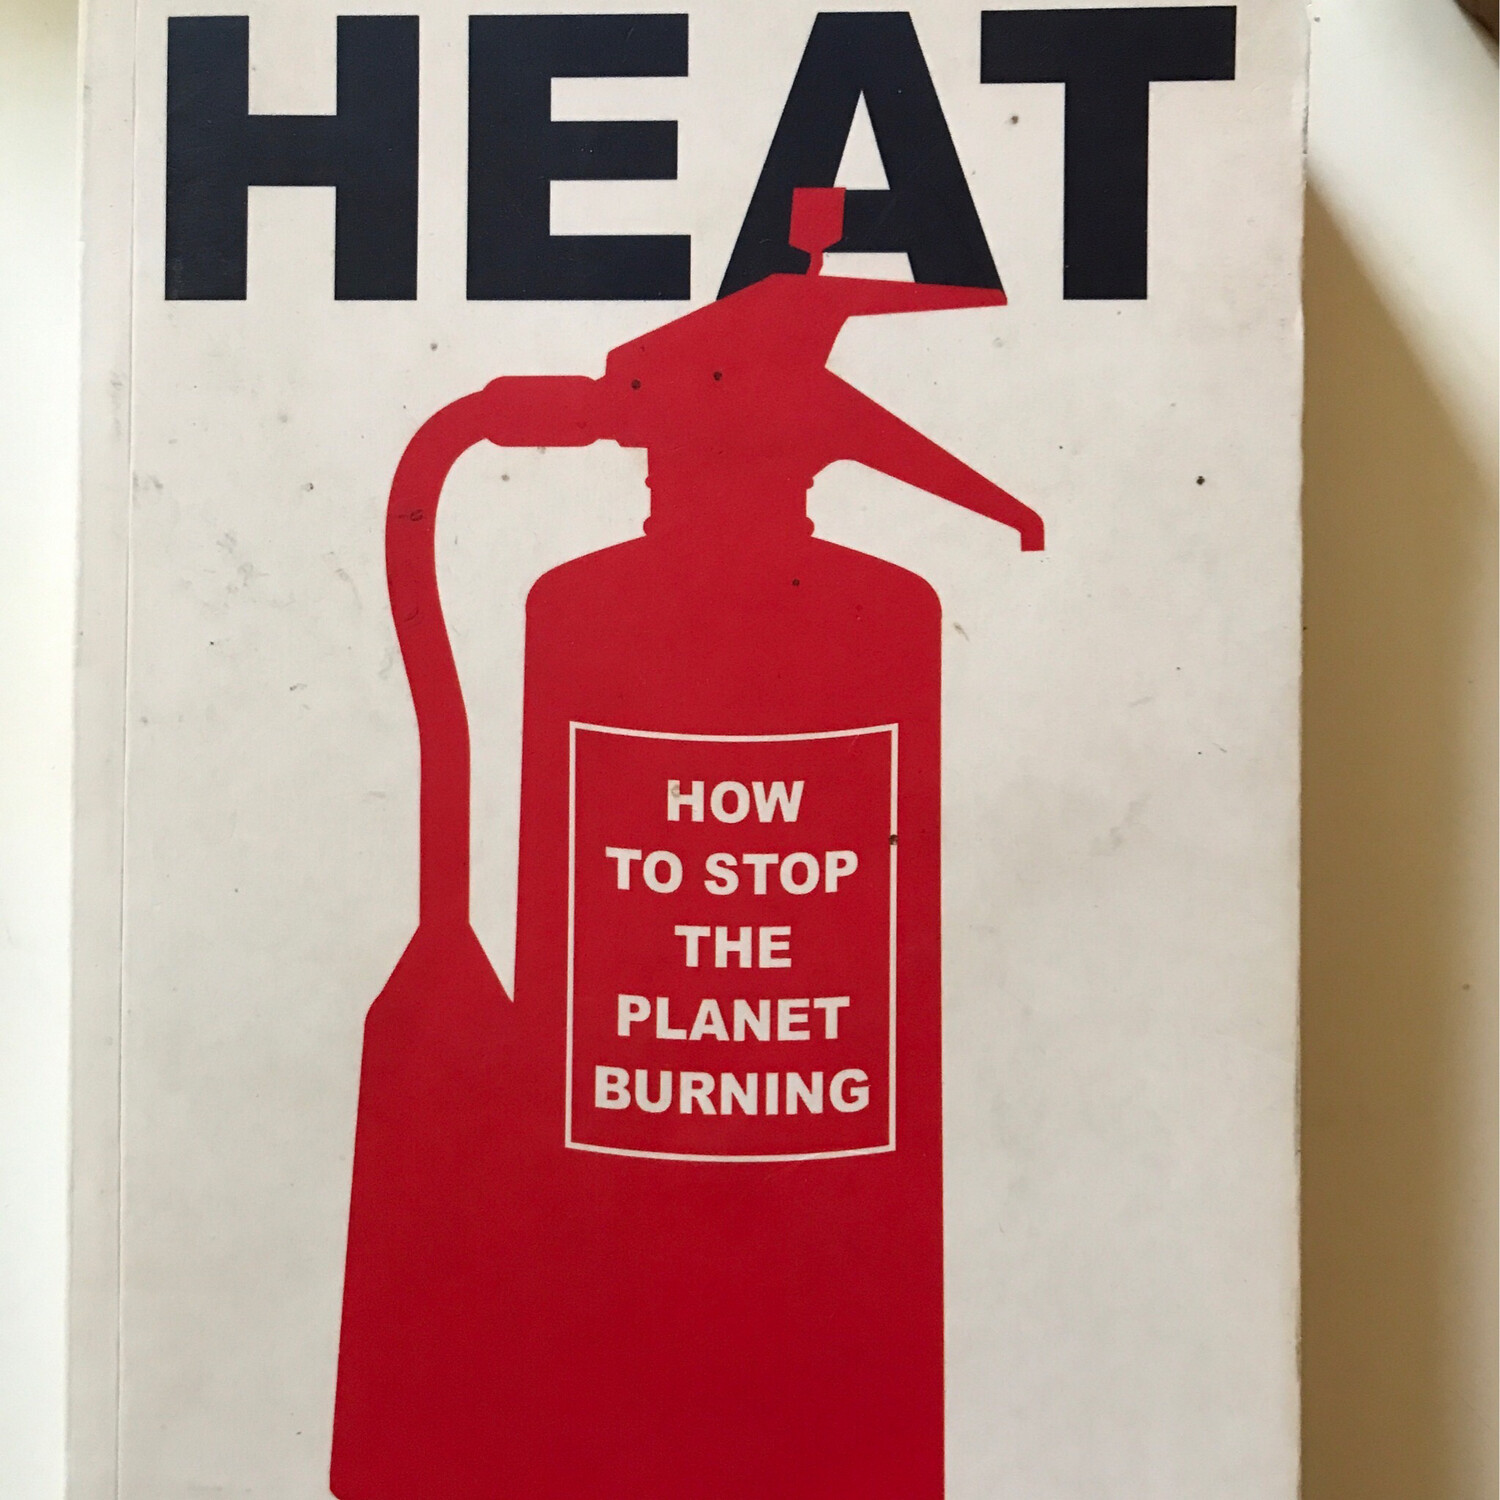 Heat, George Monbiot